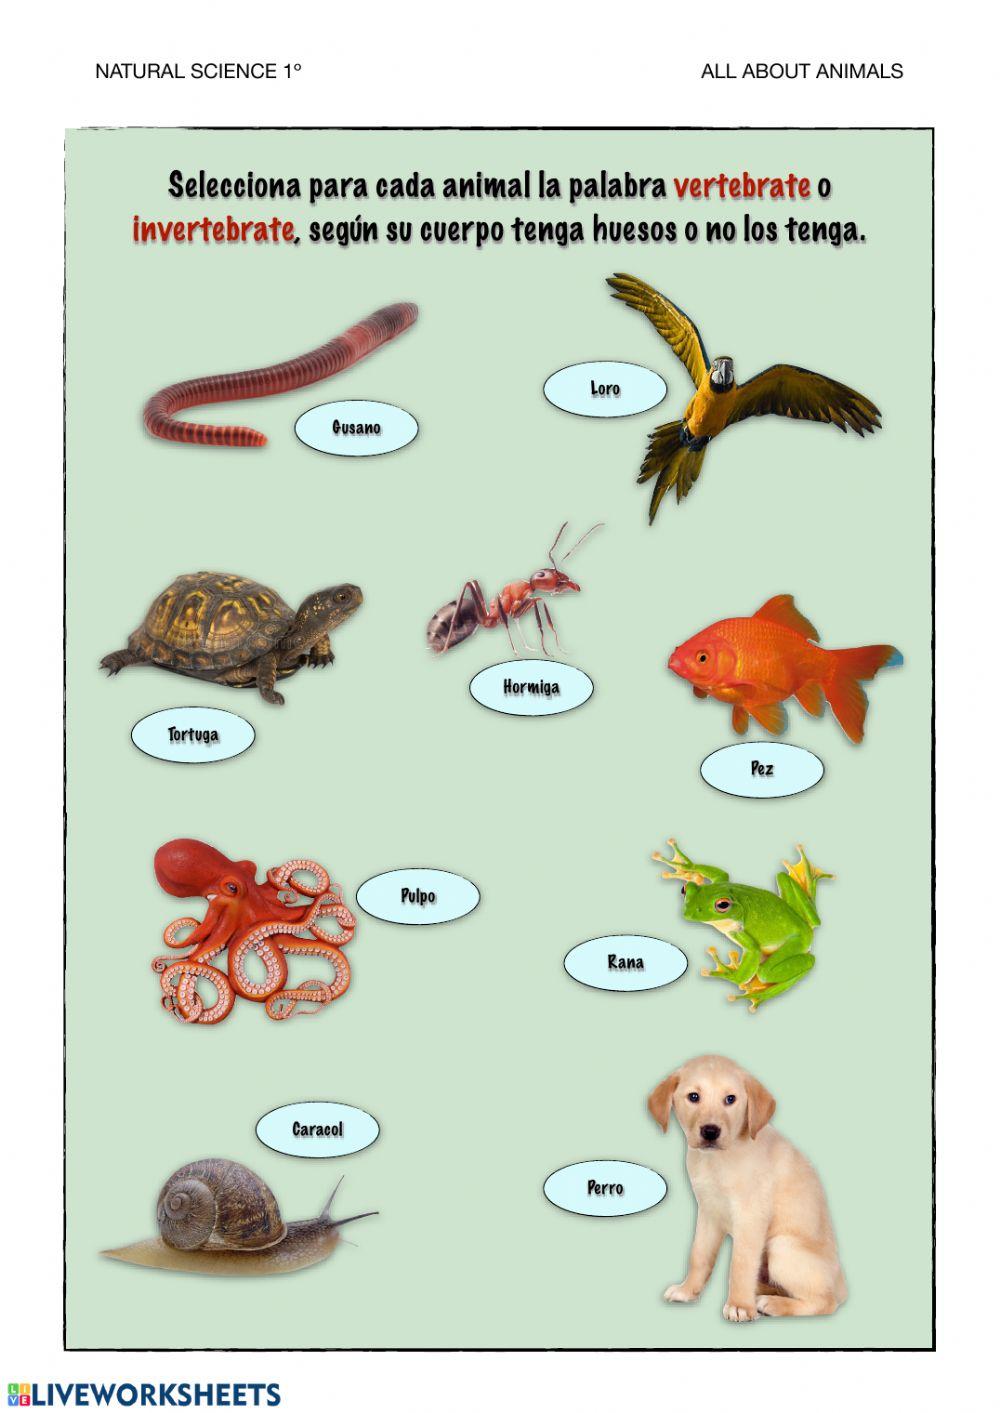 Vertebrates or invertebrates